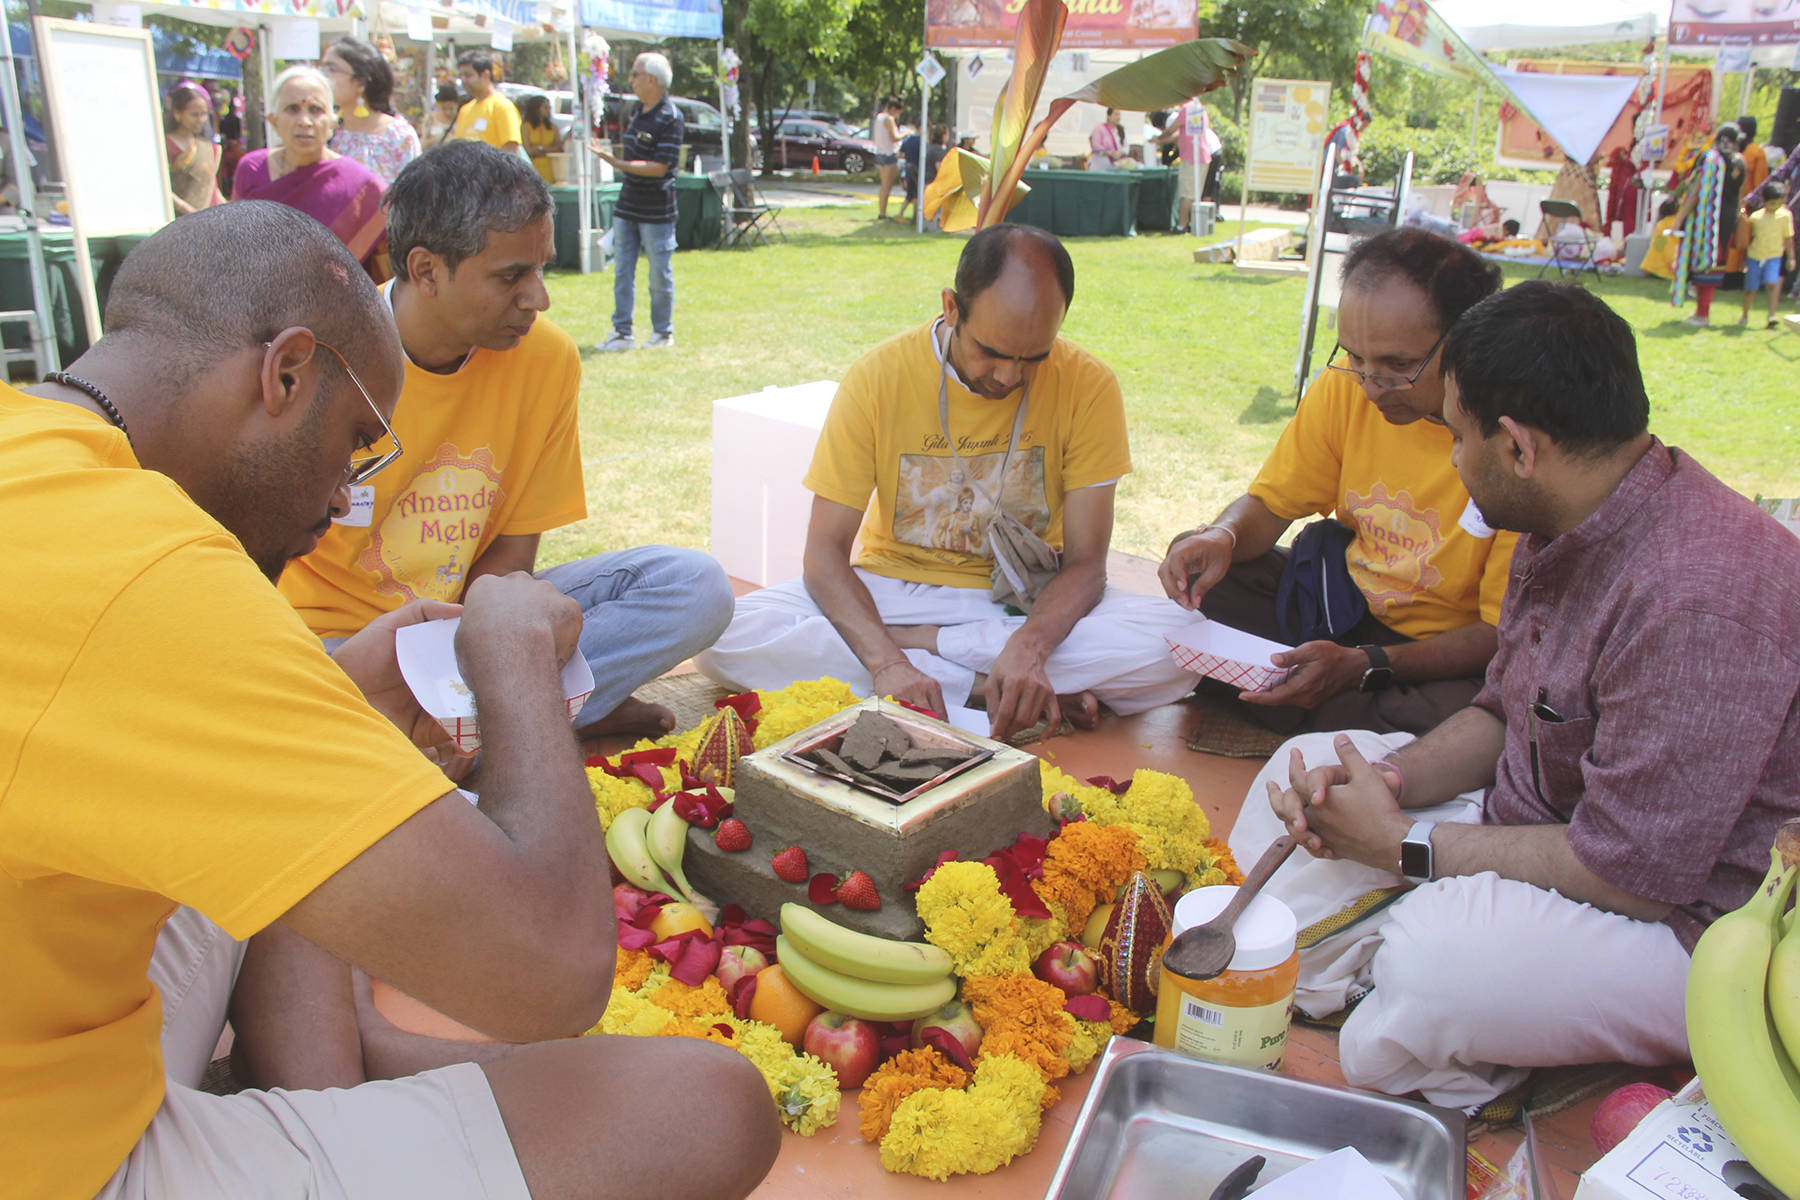 Indian festival draws thousands to Redmond